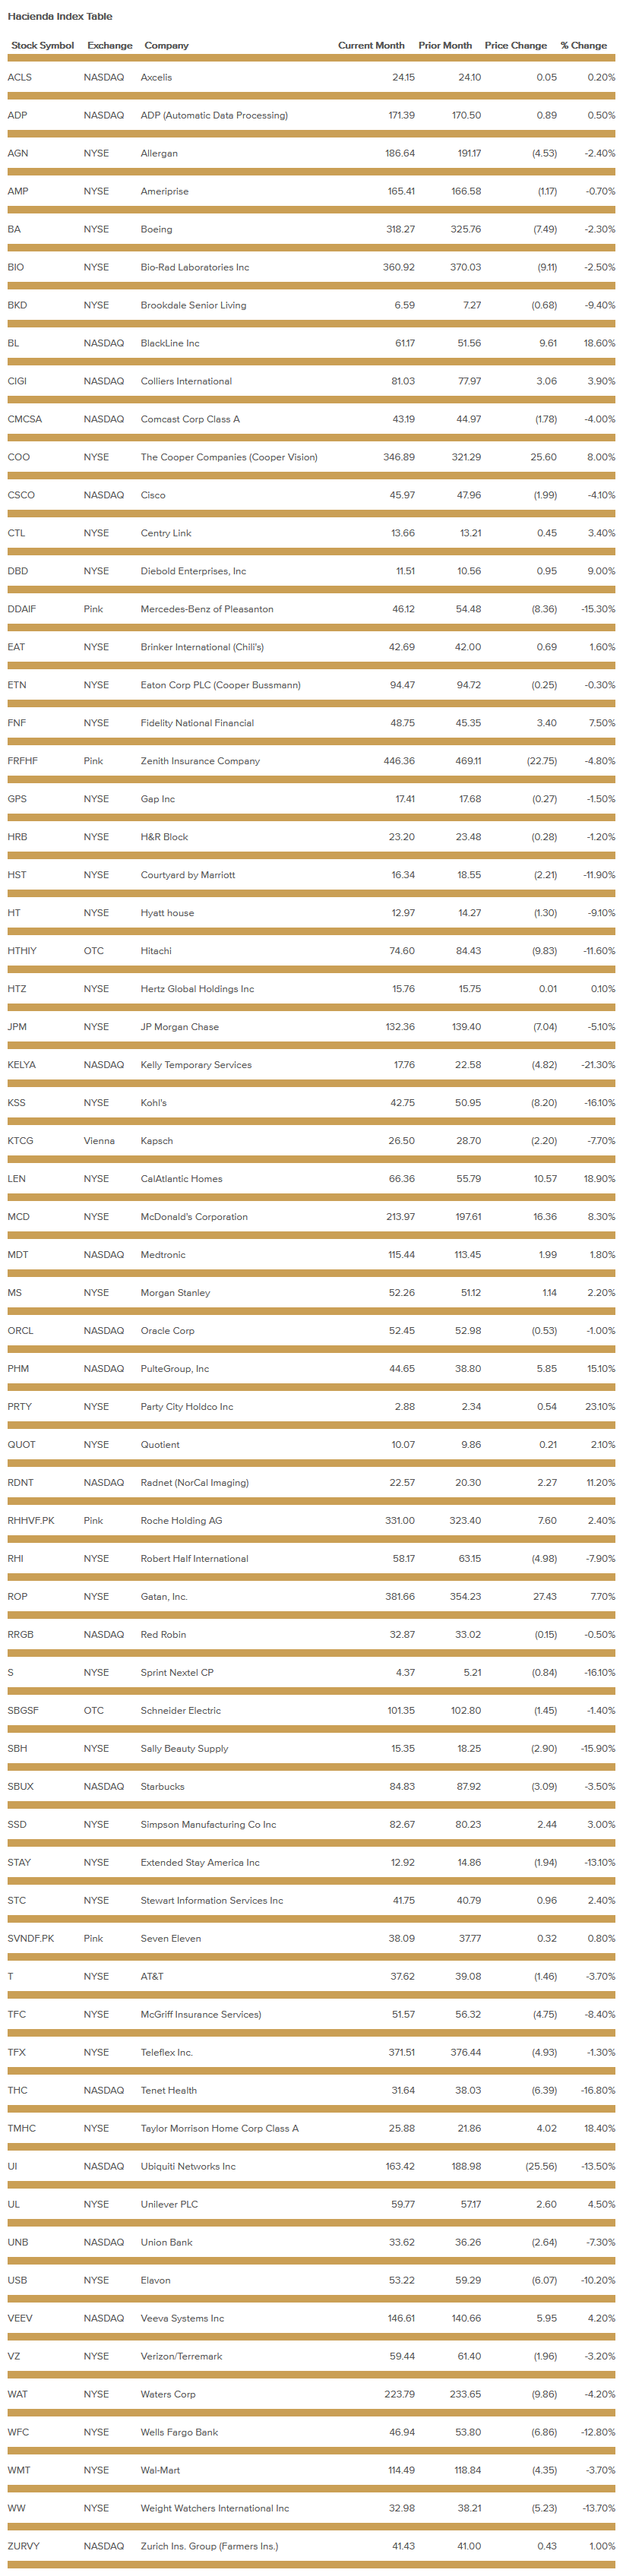 hacienda-index-table-february-2020.png